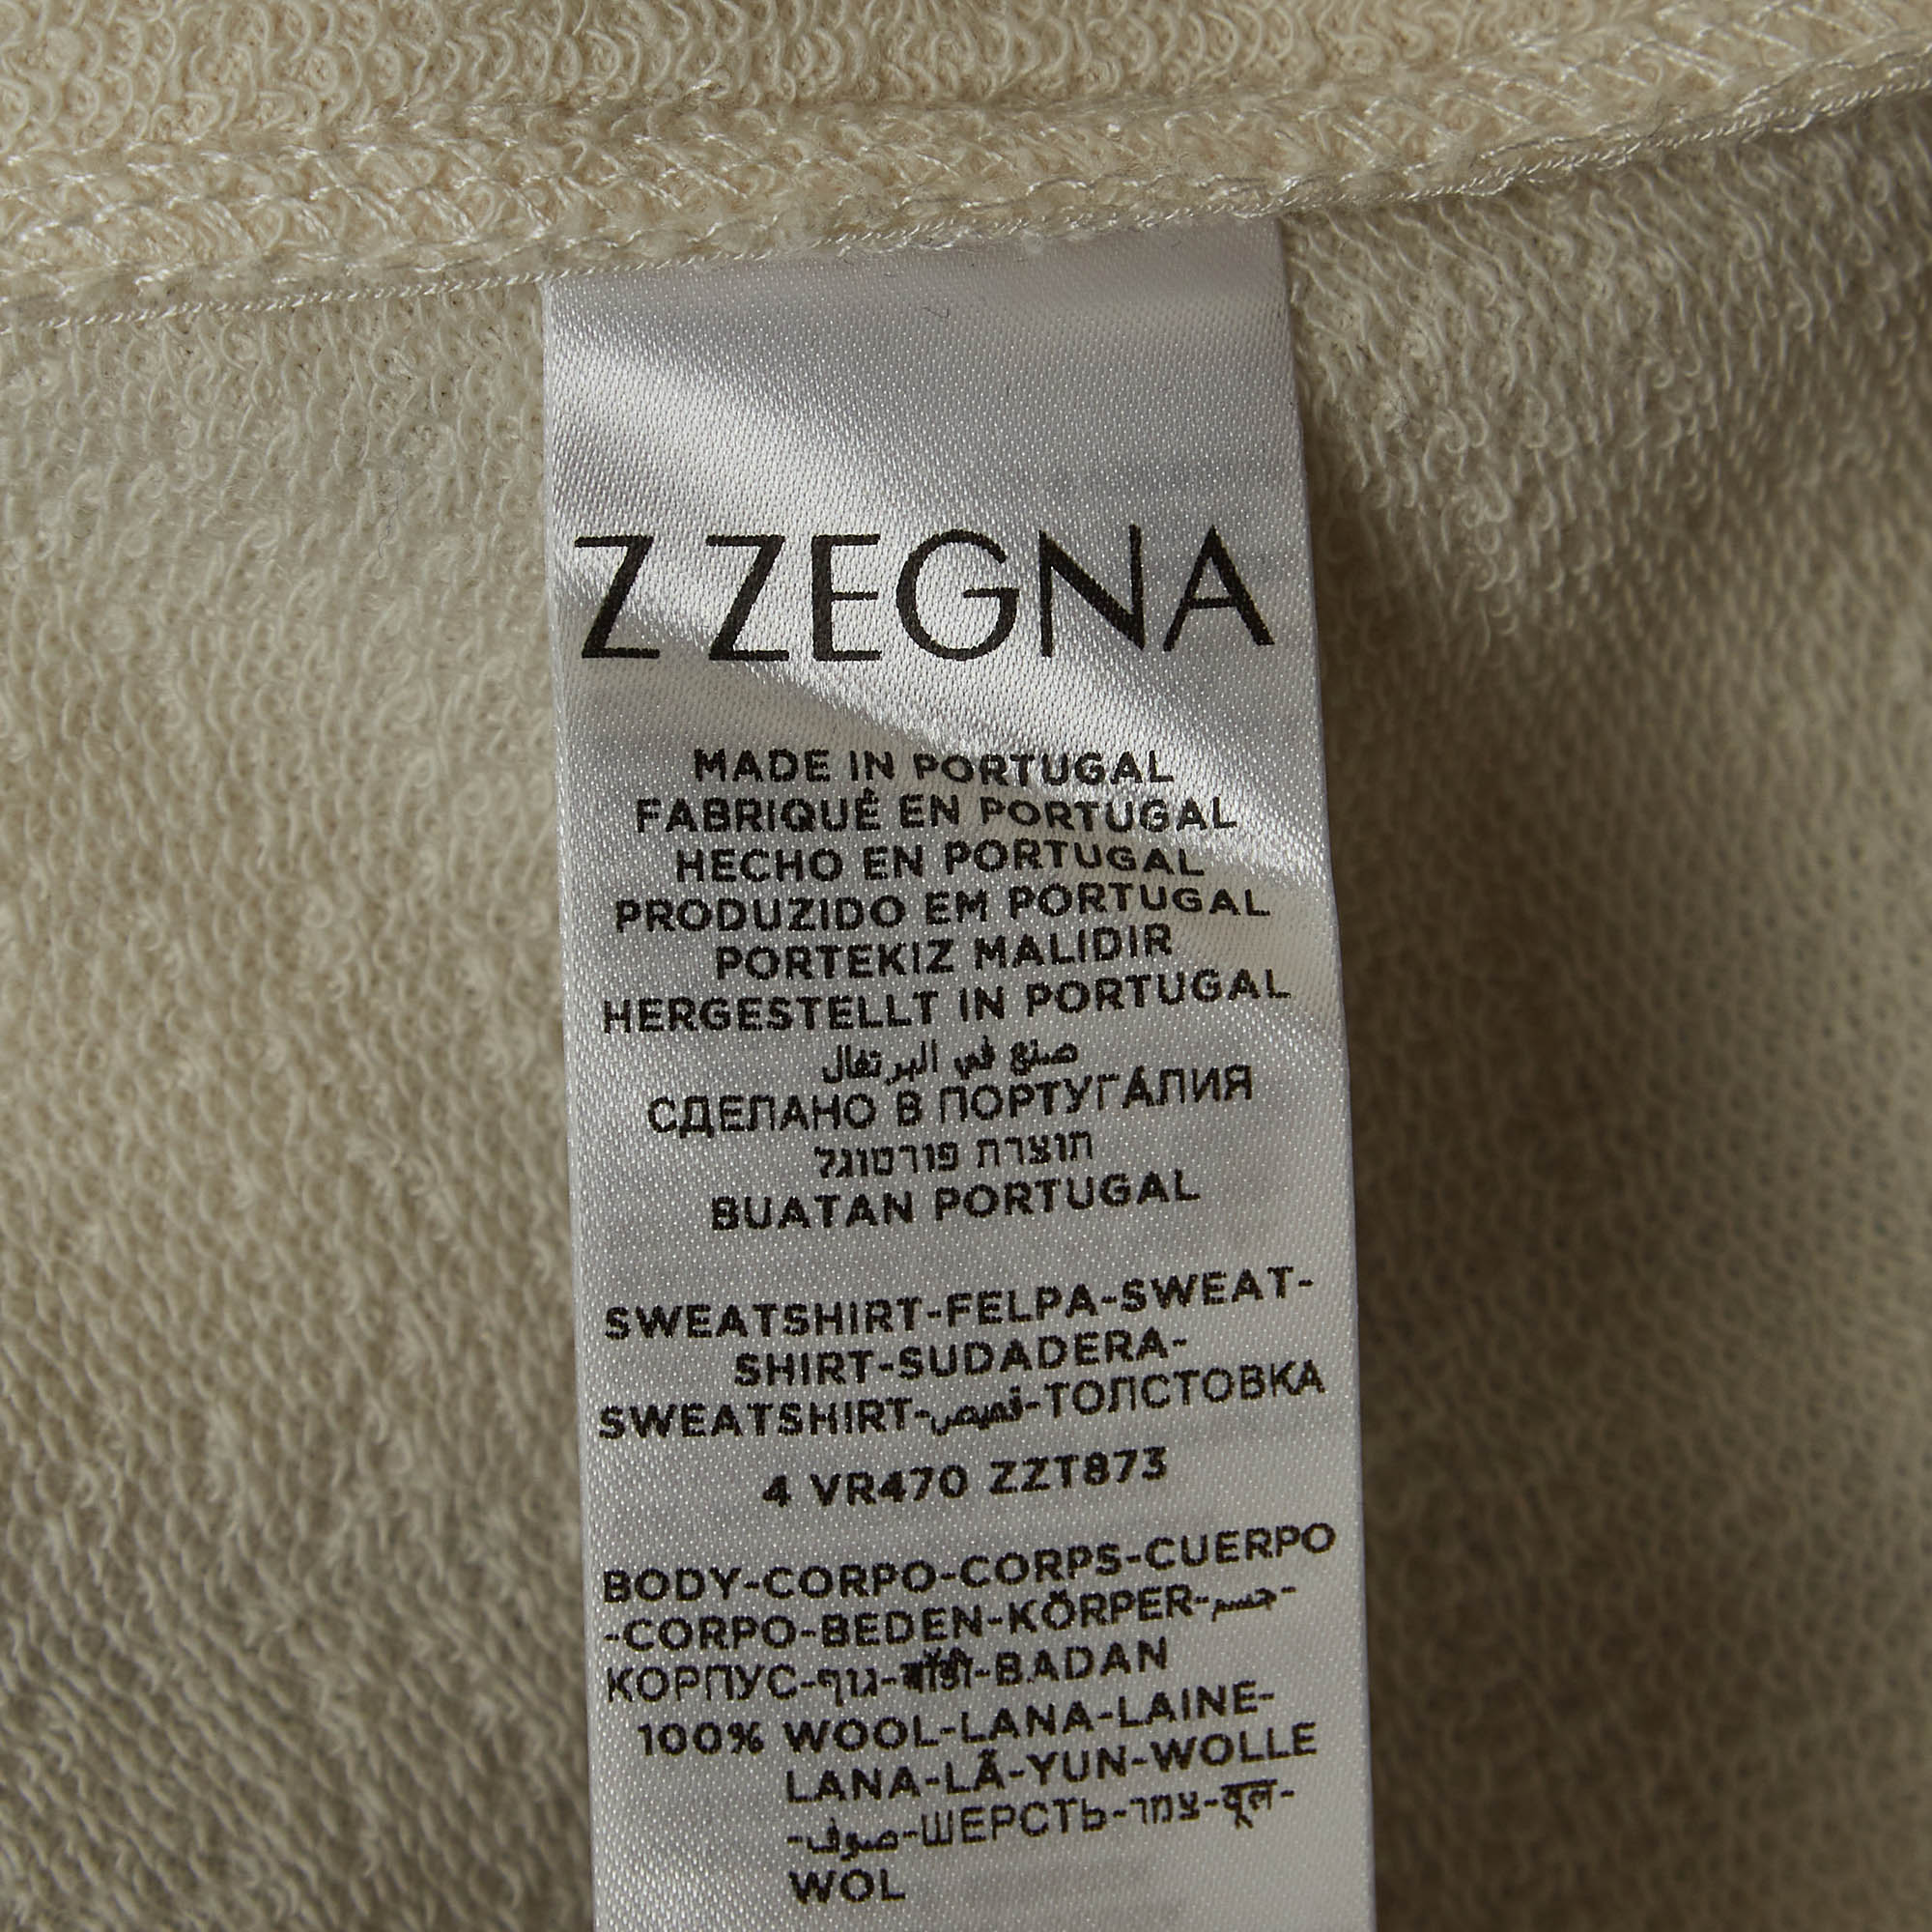 Z Zegna Techmerino Cream Patterned Wool Zip Front Sweatshirt M